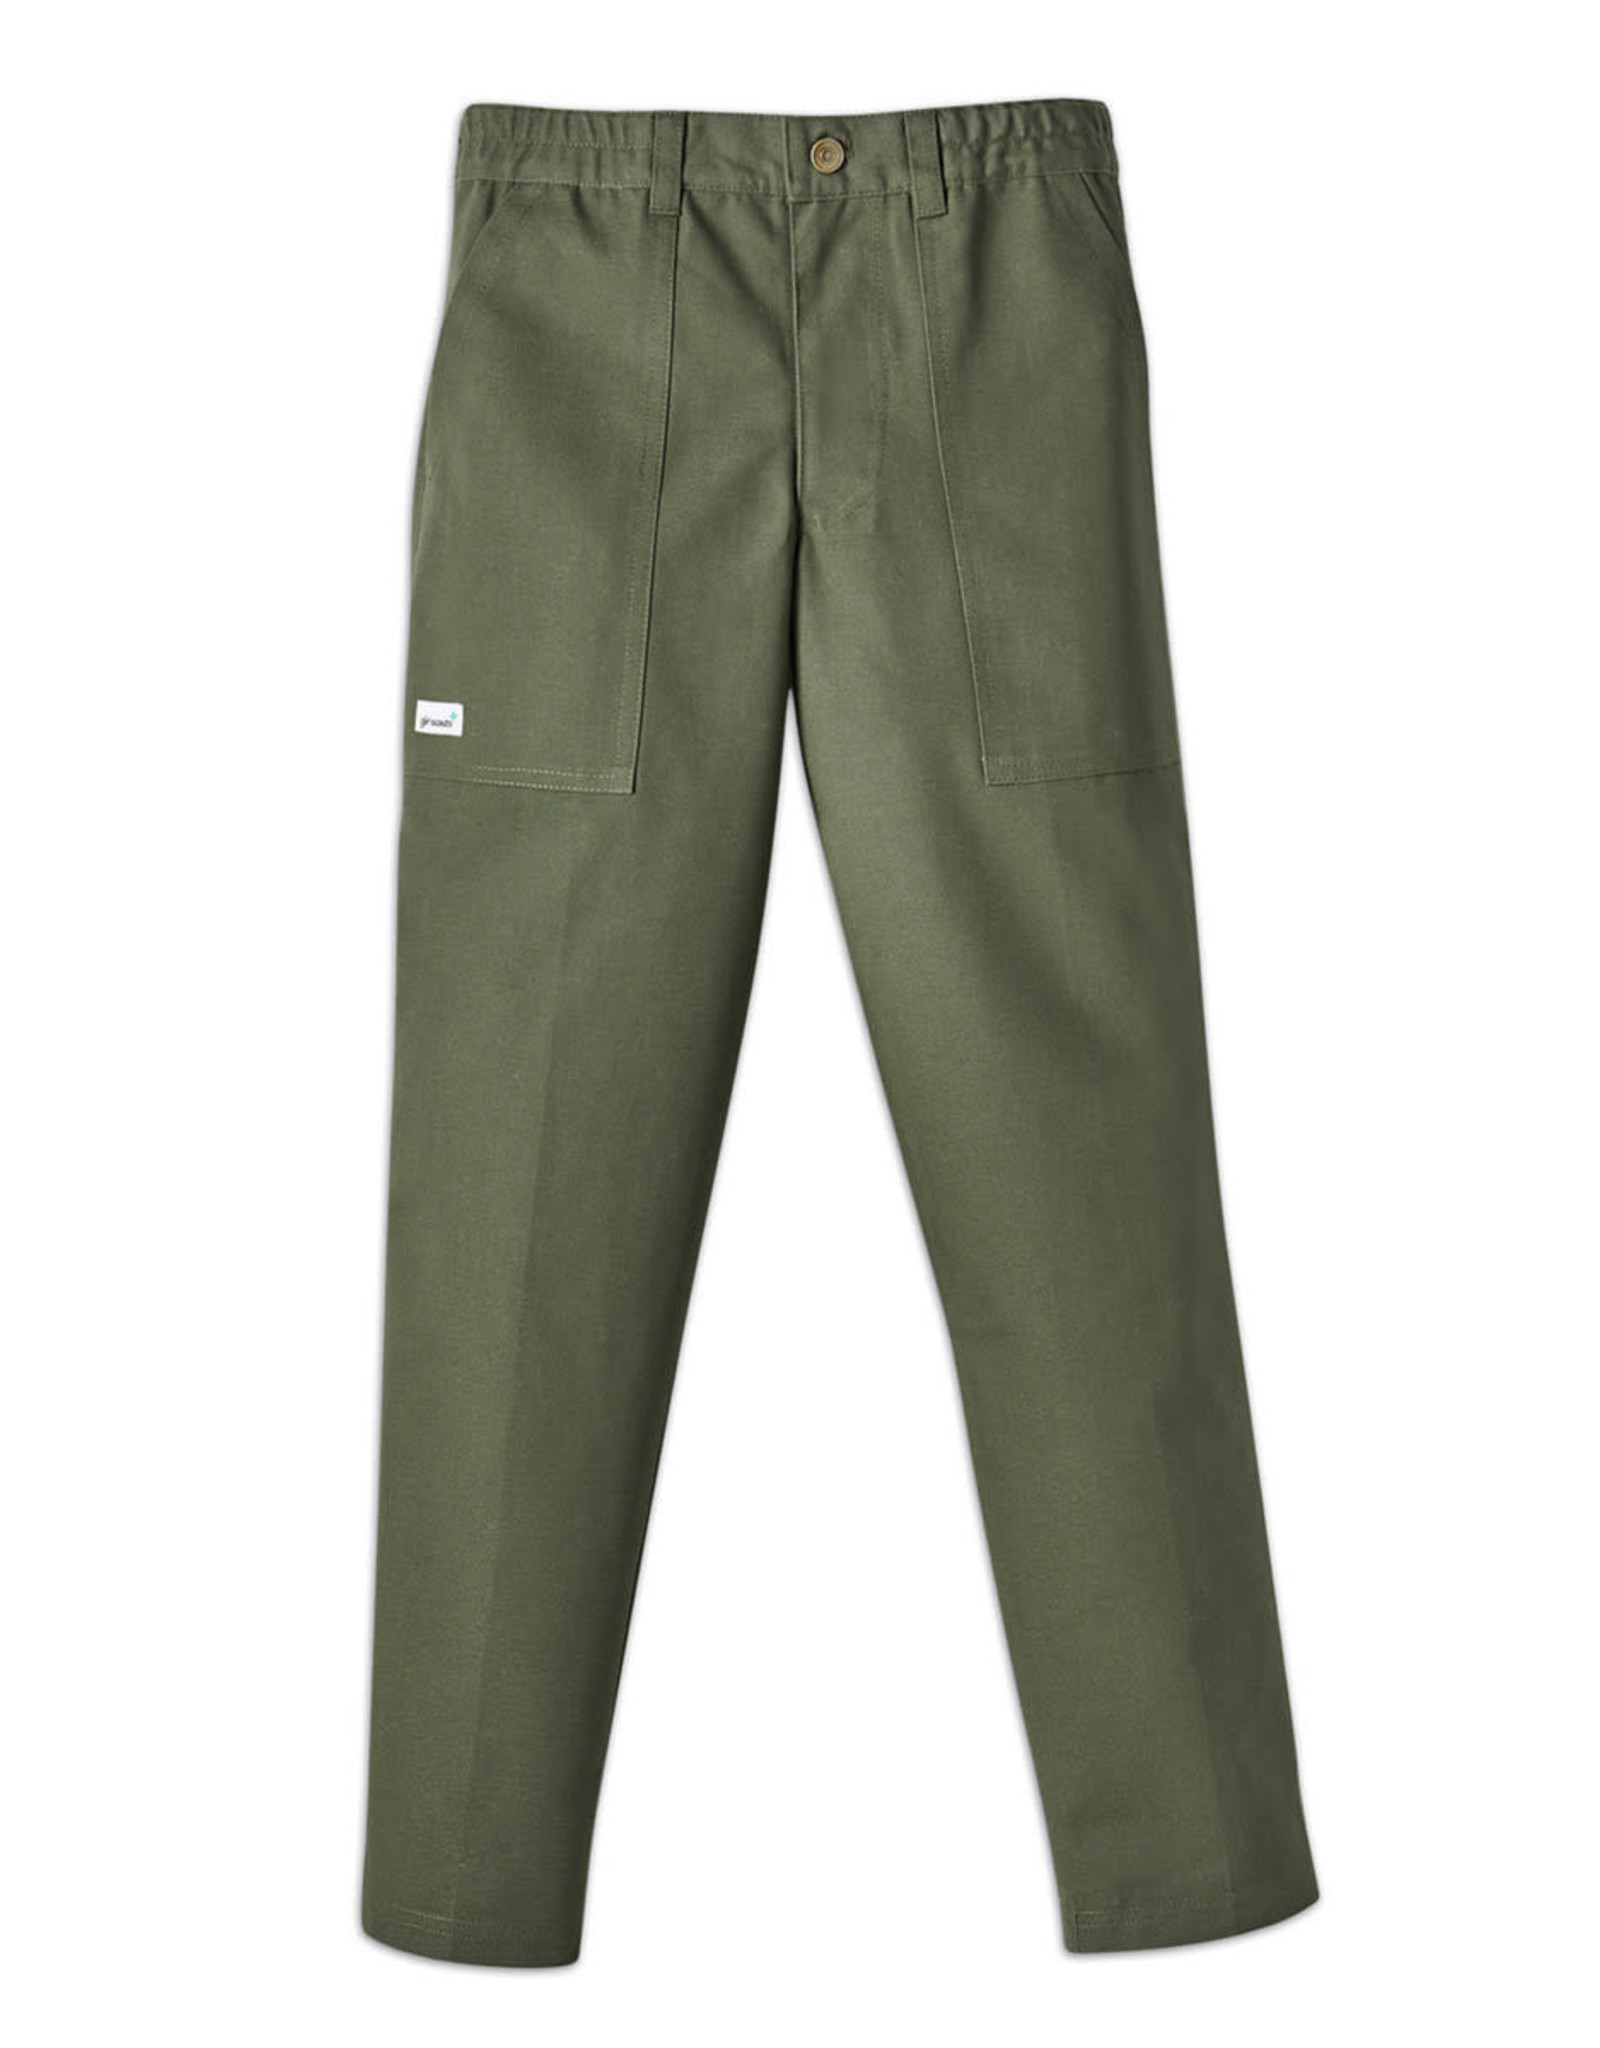 GSUSA NEW20 Olive Cargo Pants